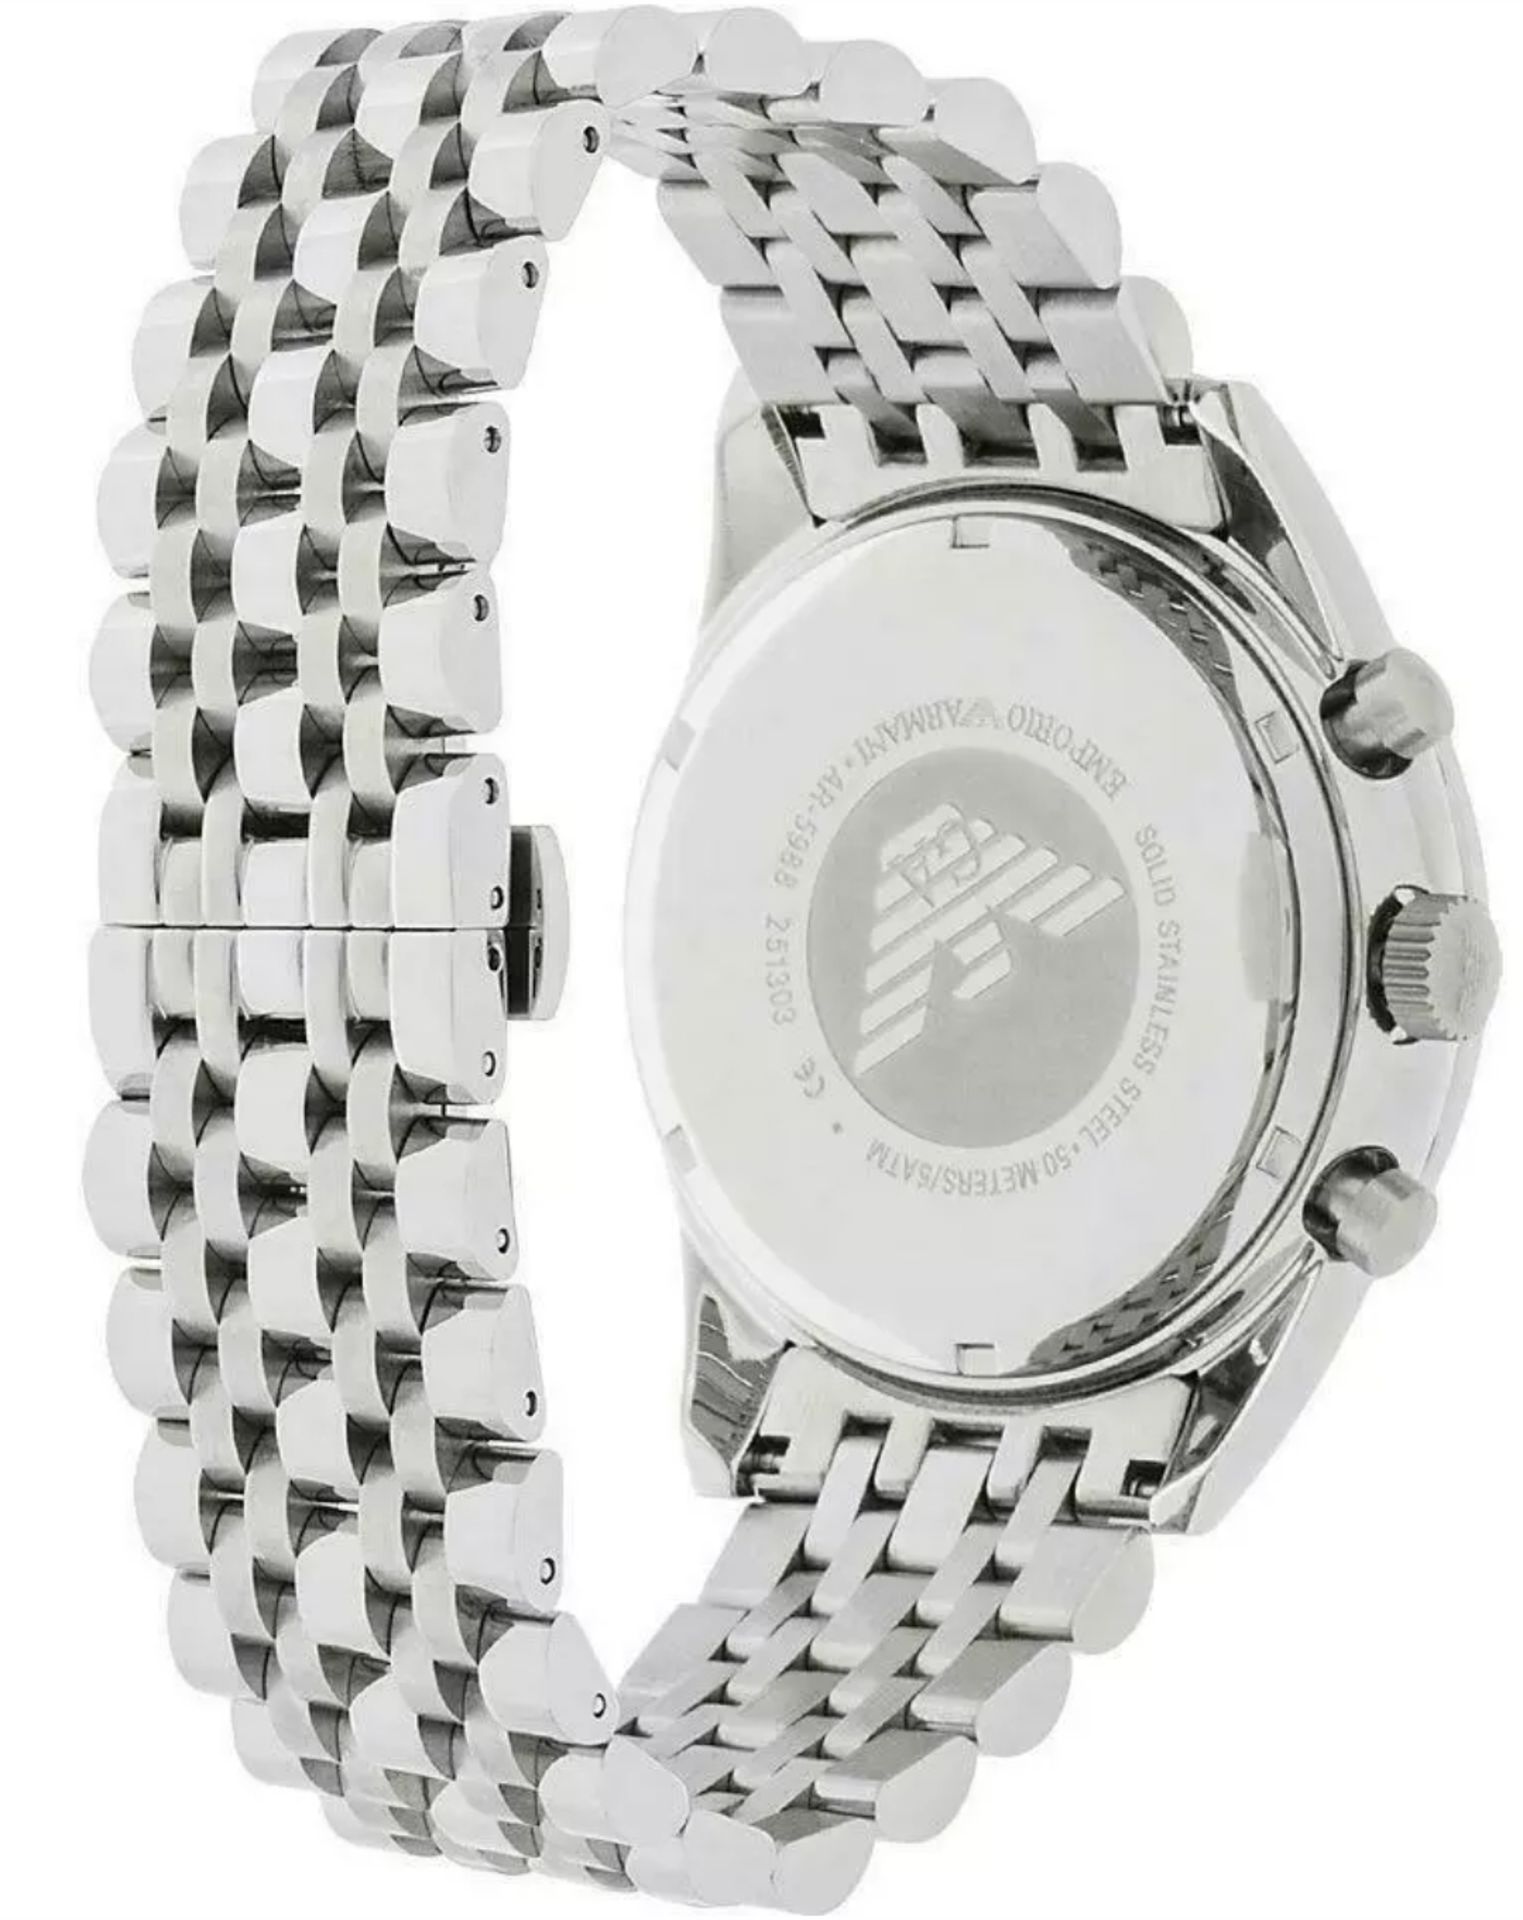 Emporio Armani AR5988 Men's Tazio Black Dial Silver Bracelet Chronograph Watch - Image 7 of 10